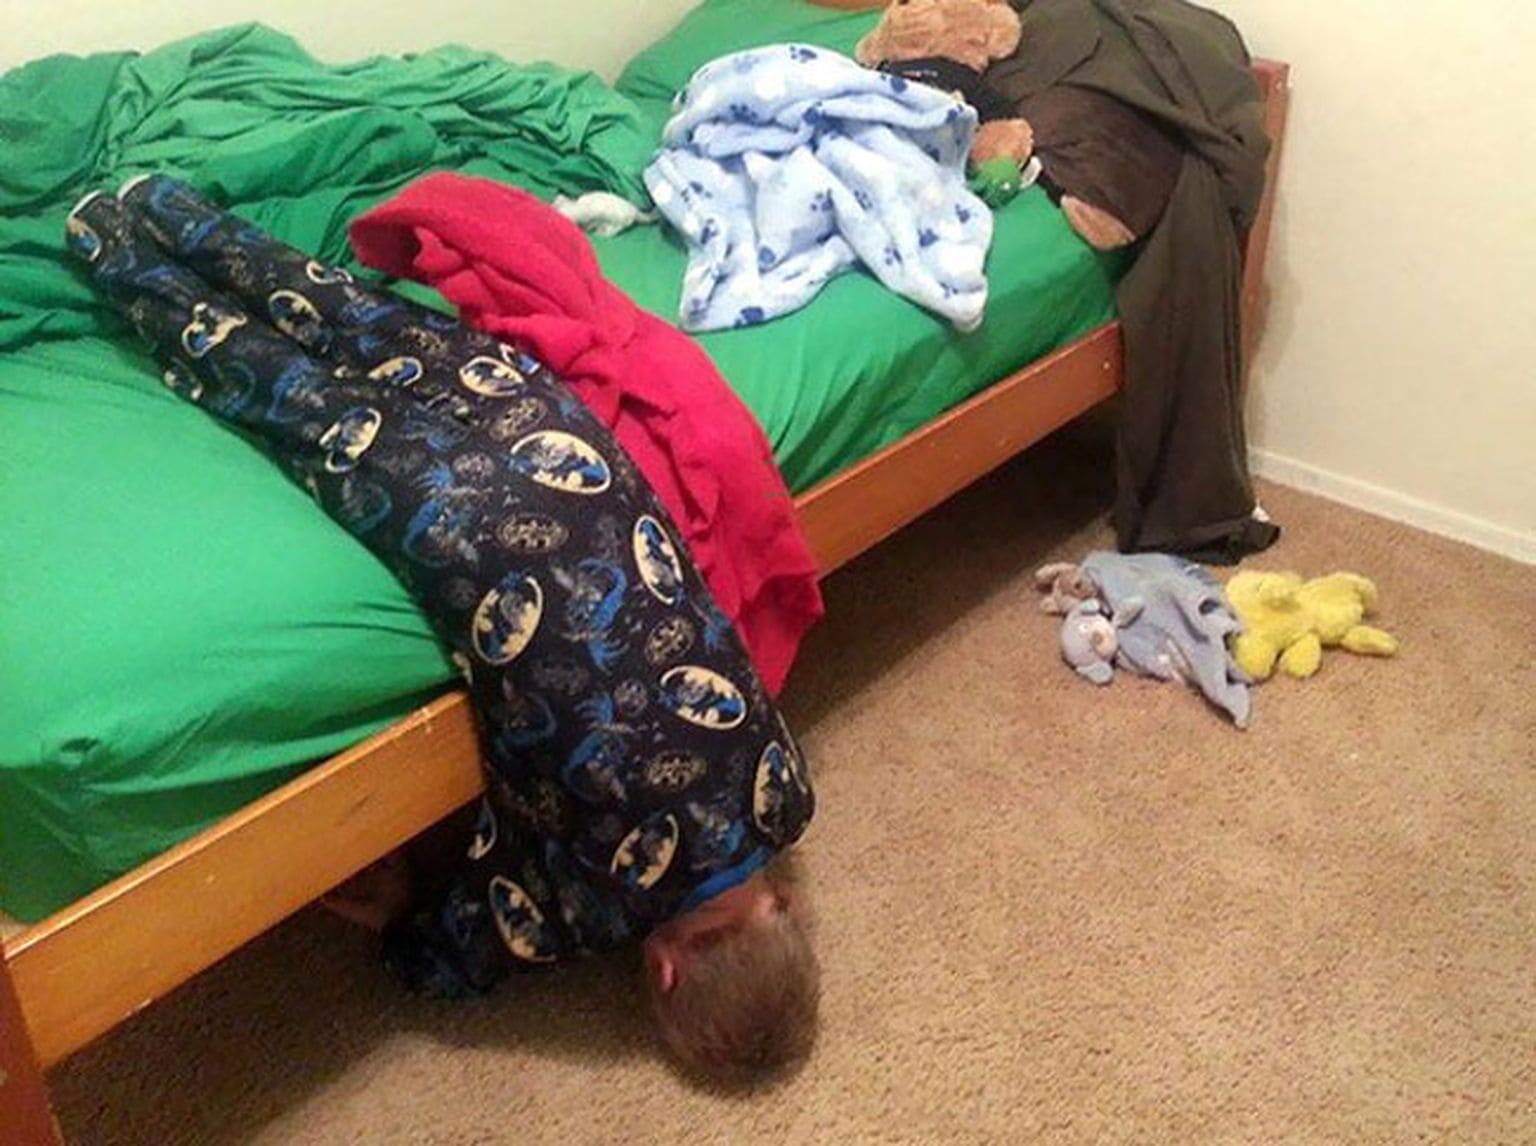 падения с кровати во сне ребенка